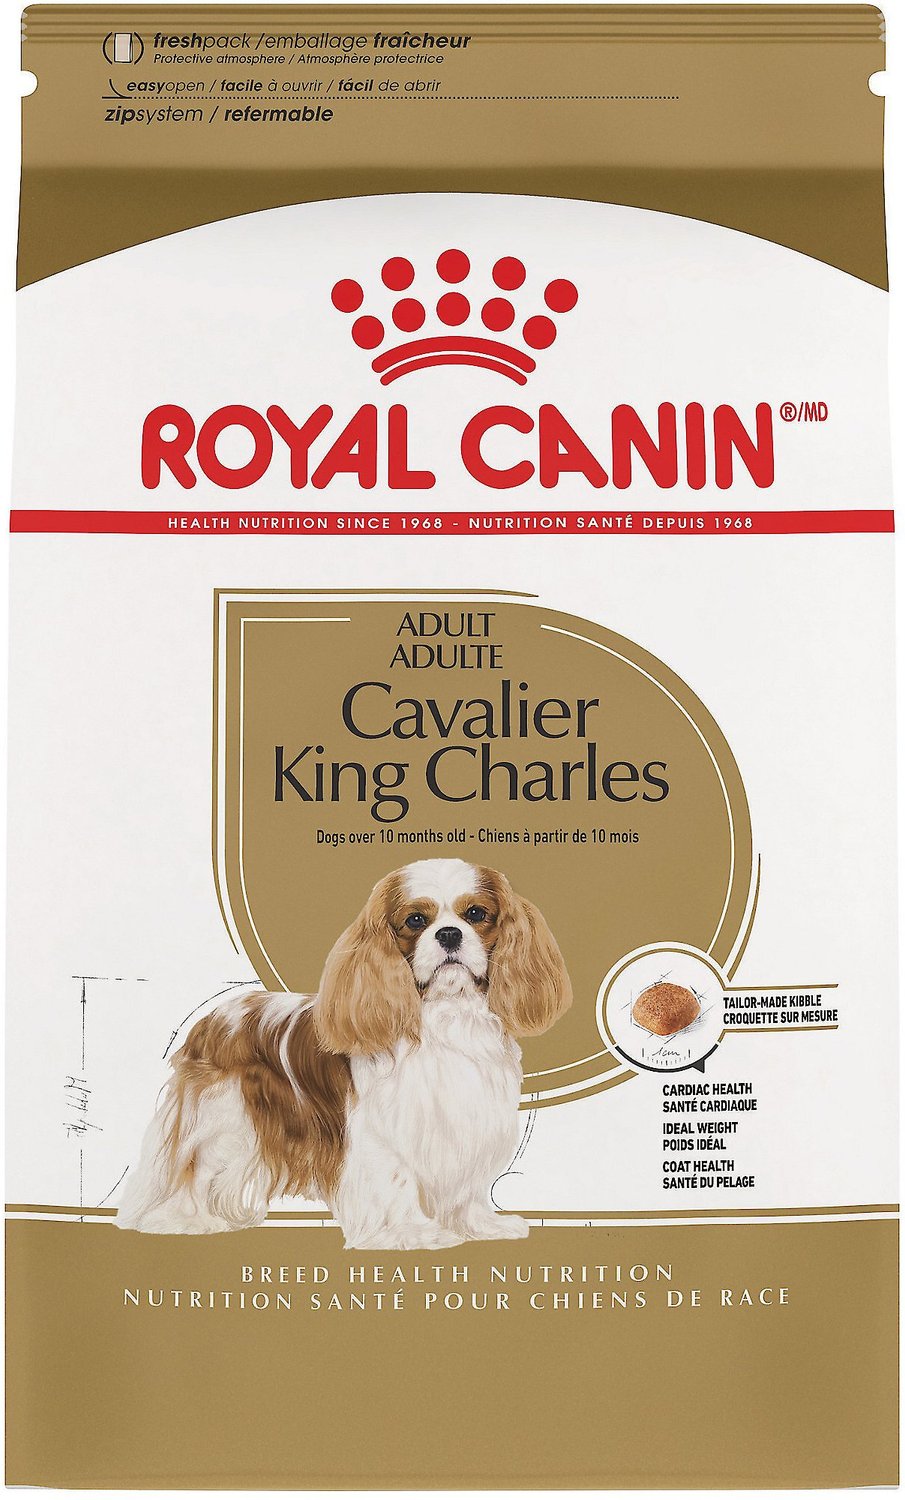 royal canin cocker spaniel dog food